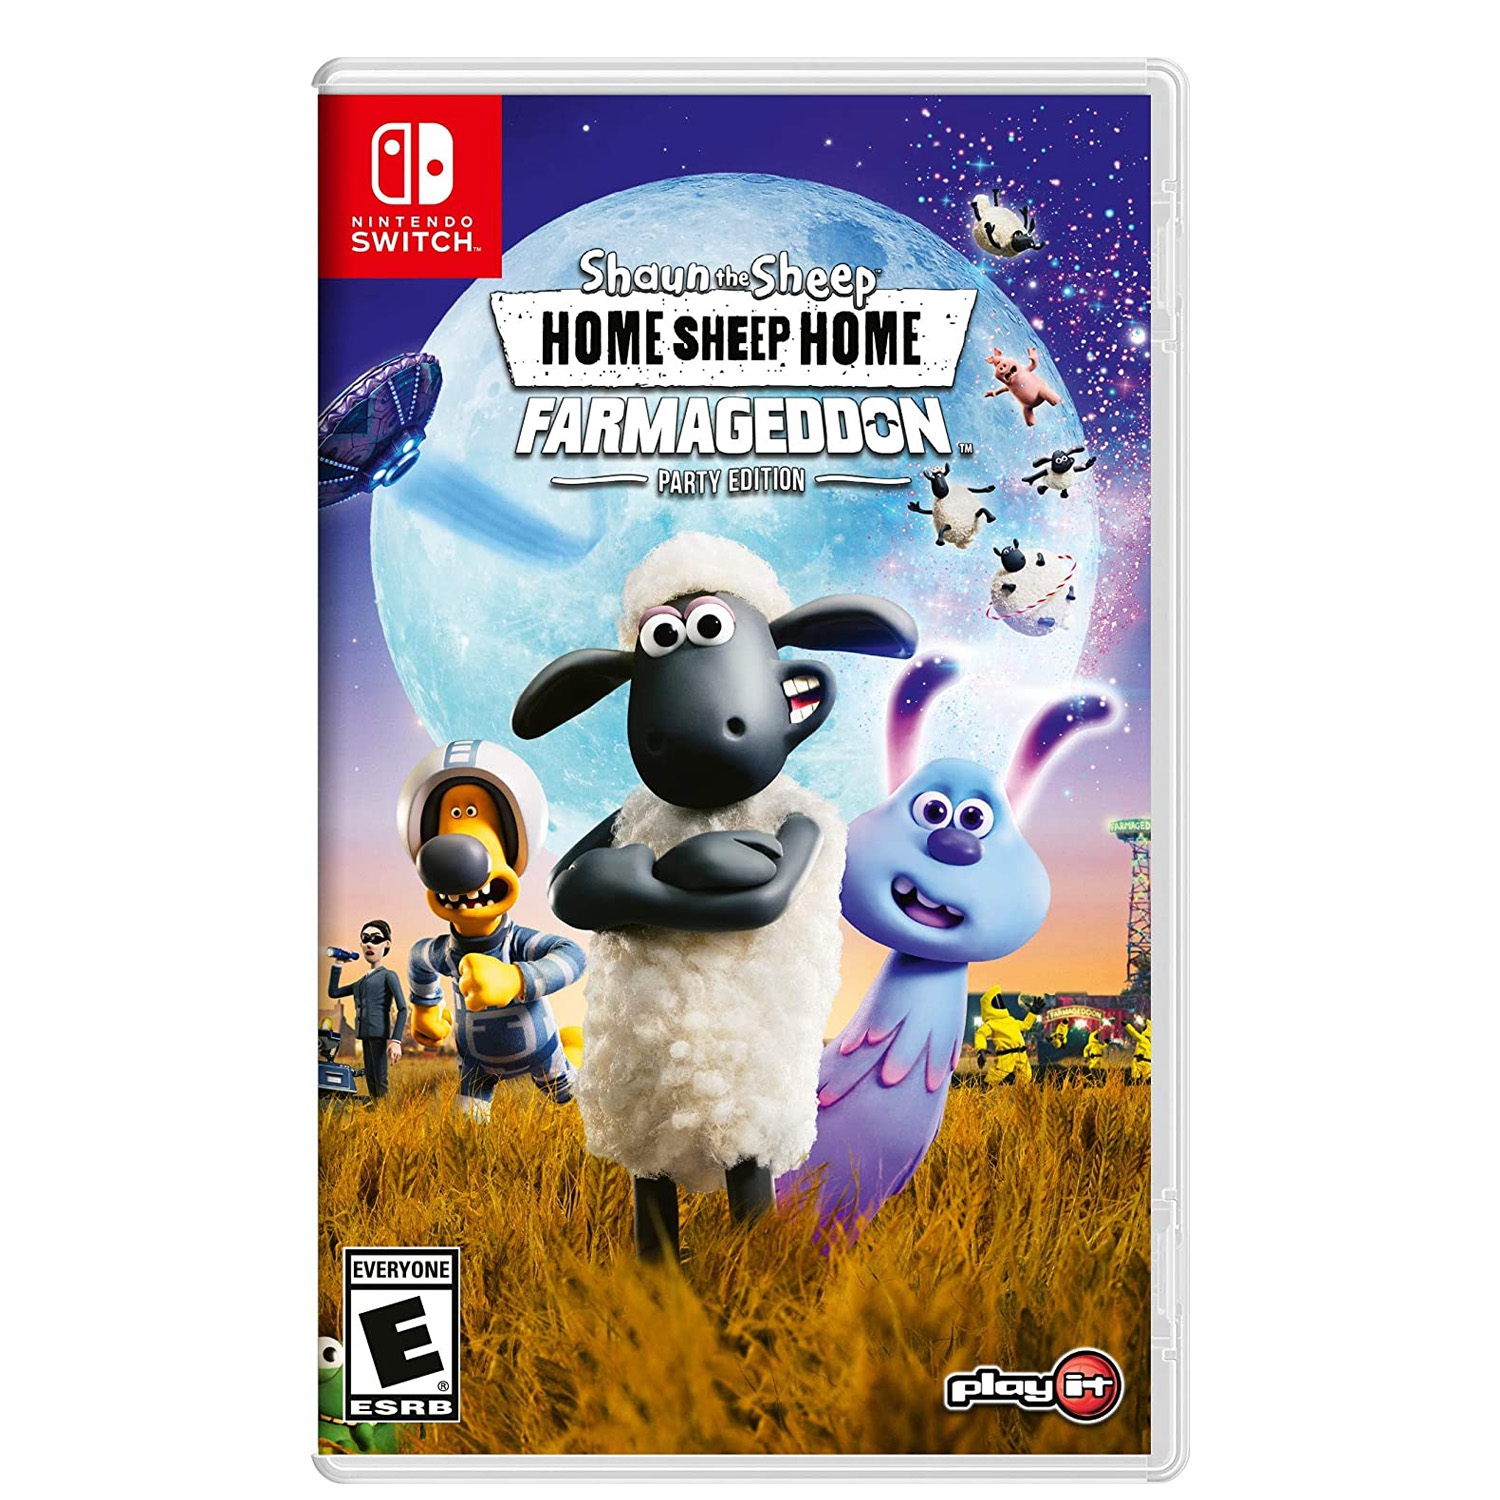 Shaun The Sheep Home Sheep Home Farmageddon Party Edition - Nintendo Switch